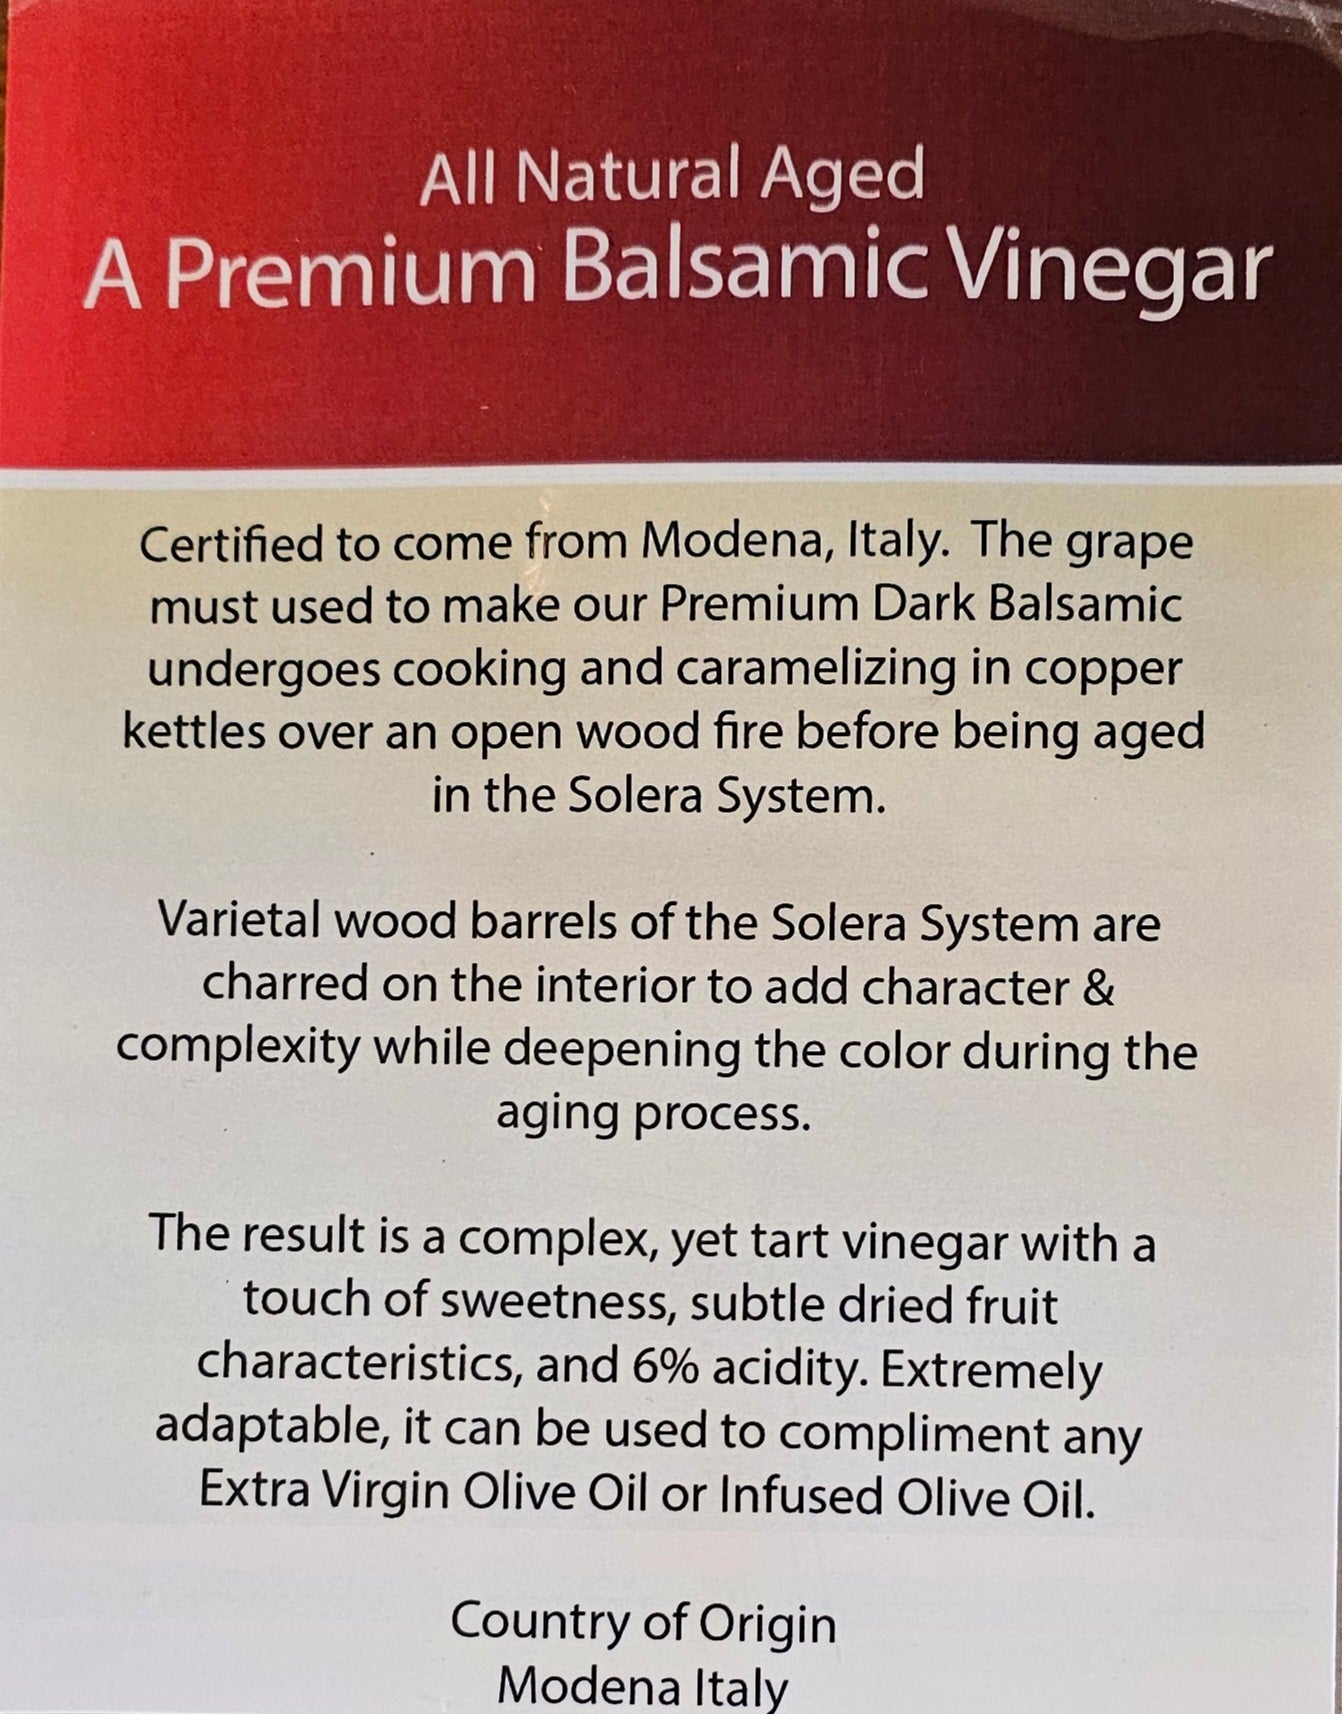 A Premium Dark Balsamic